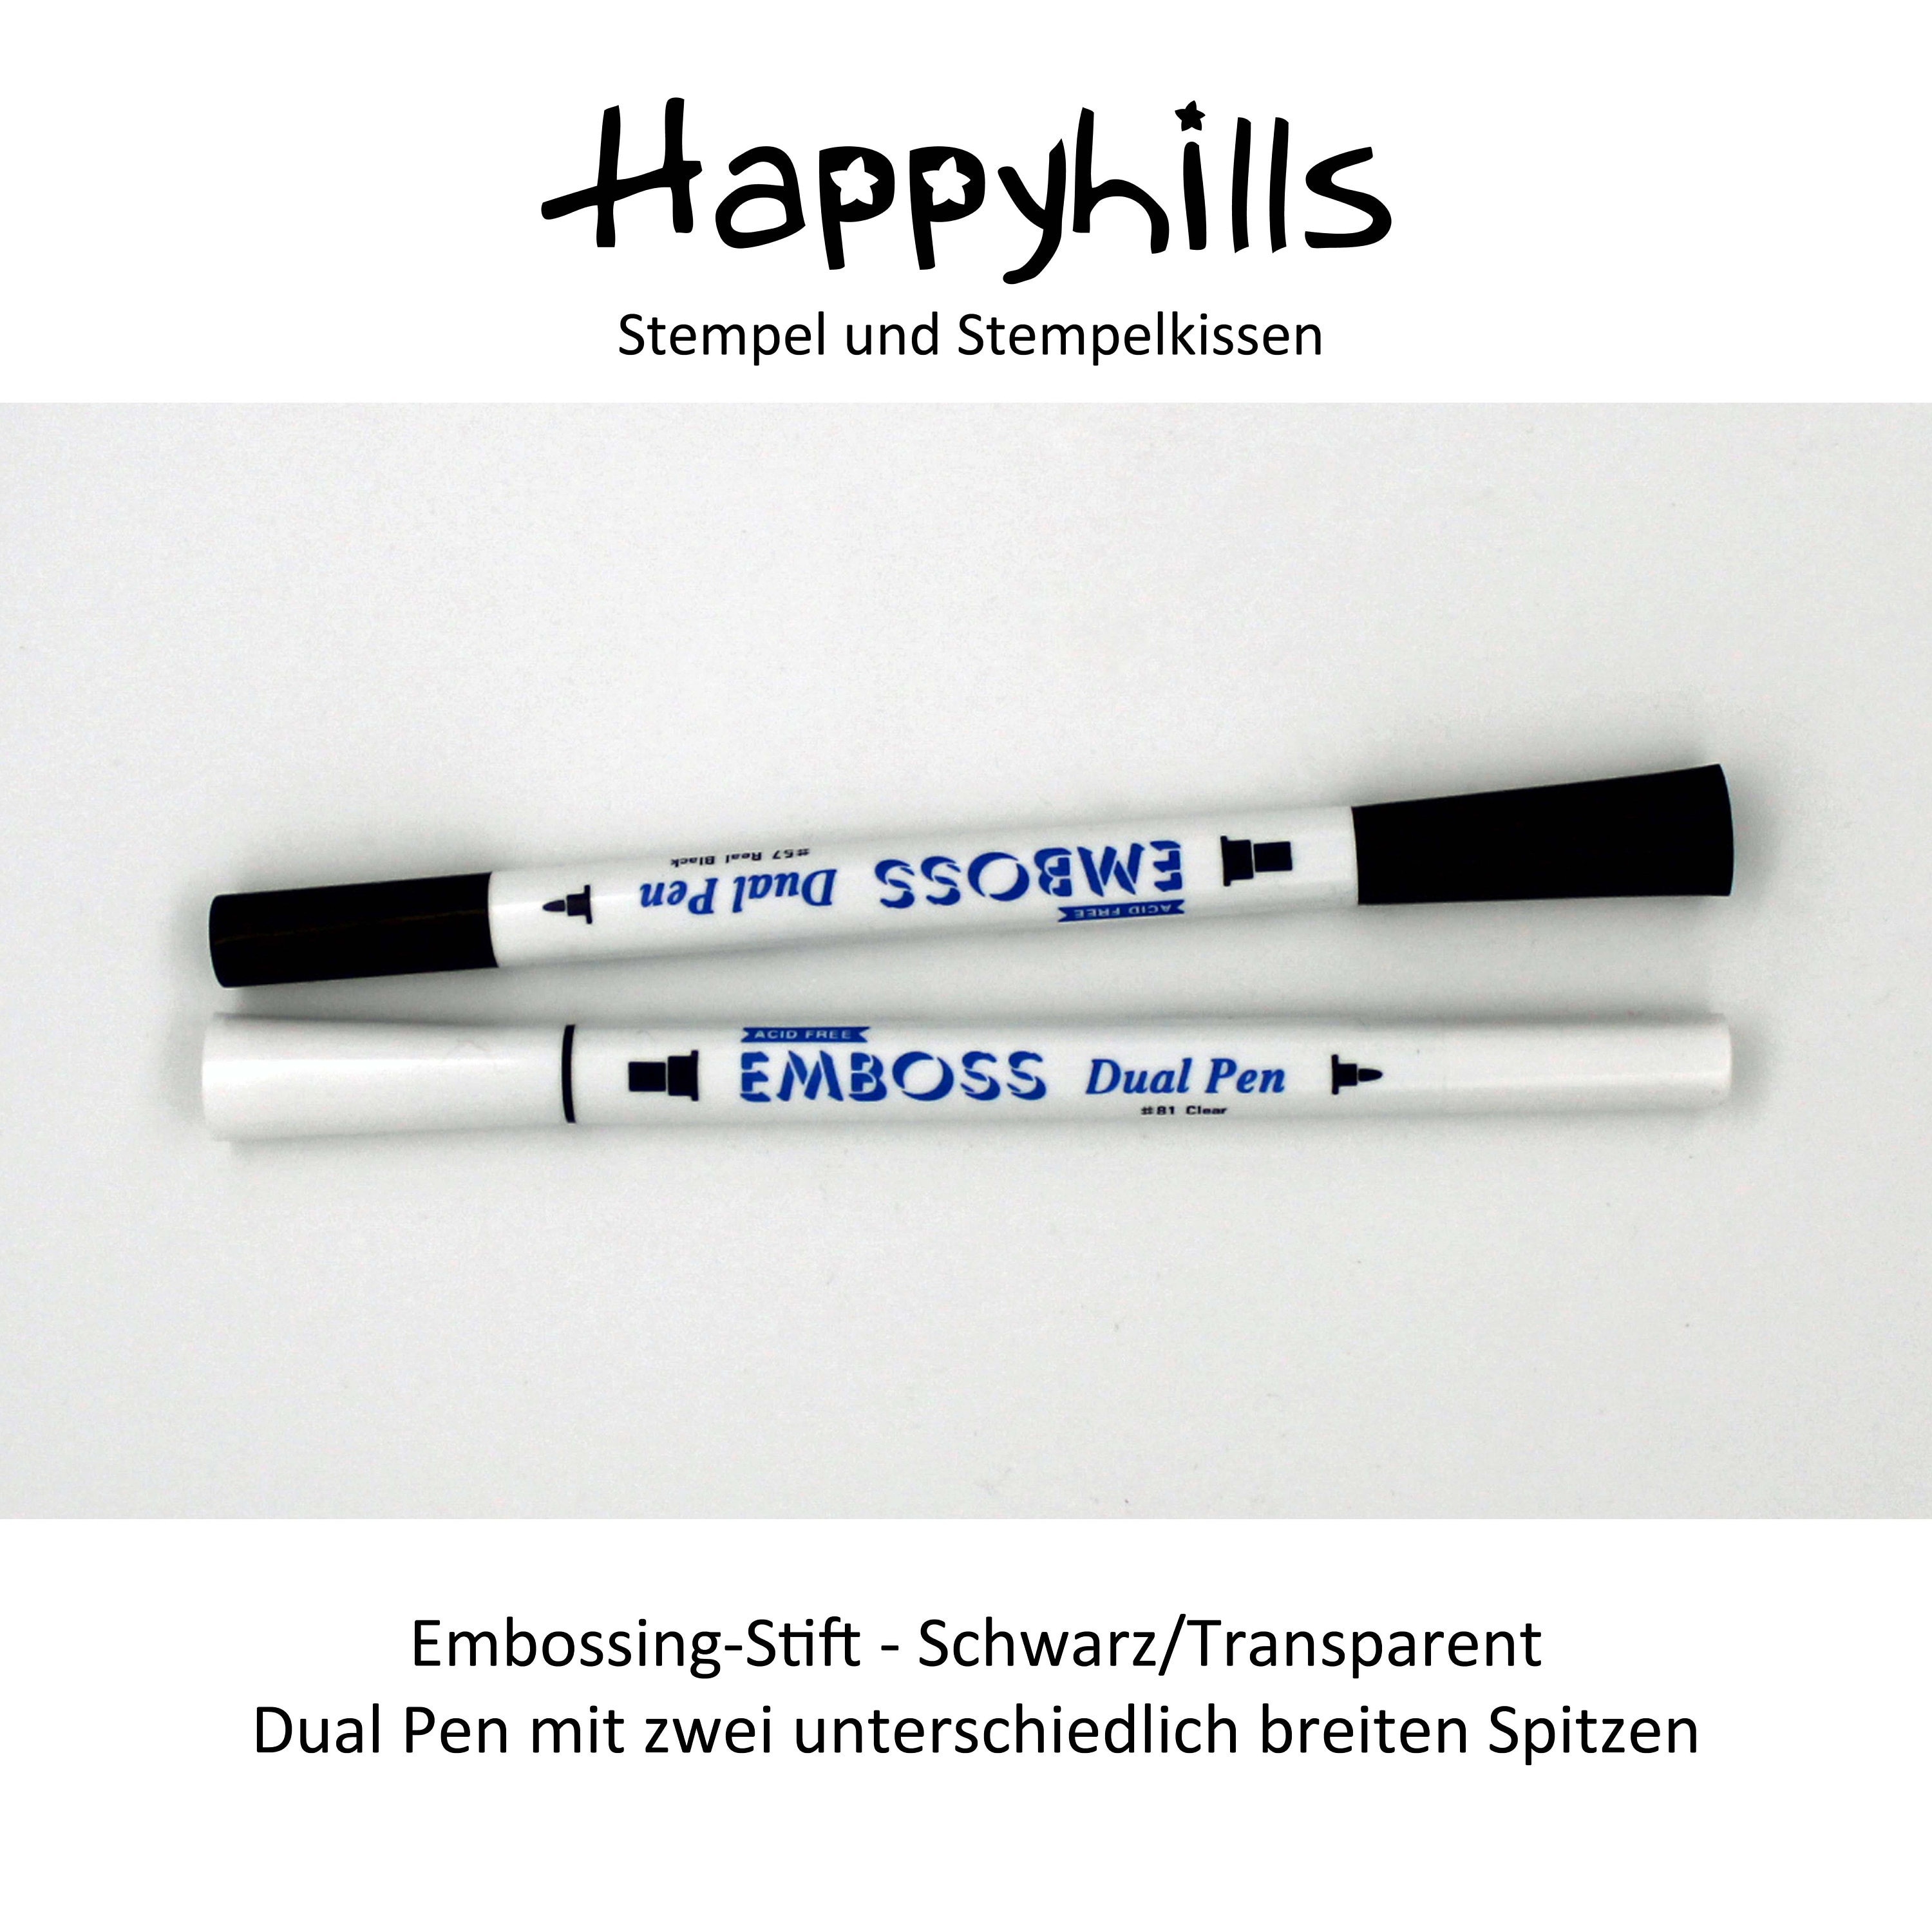 Emboss Dual Pen Black or Transparent Tsukineko by Happyhills